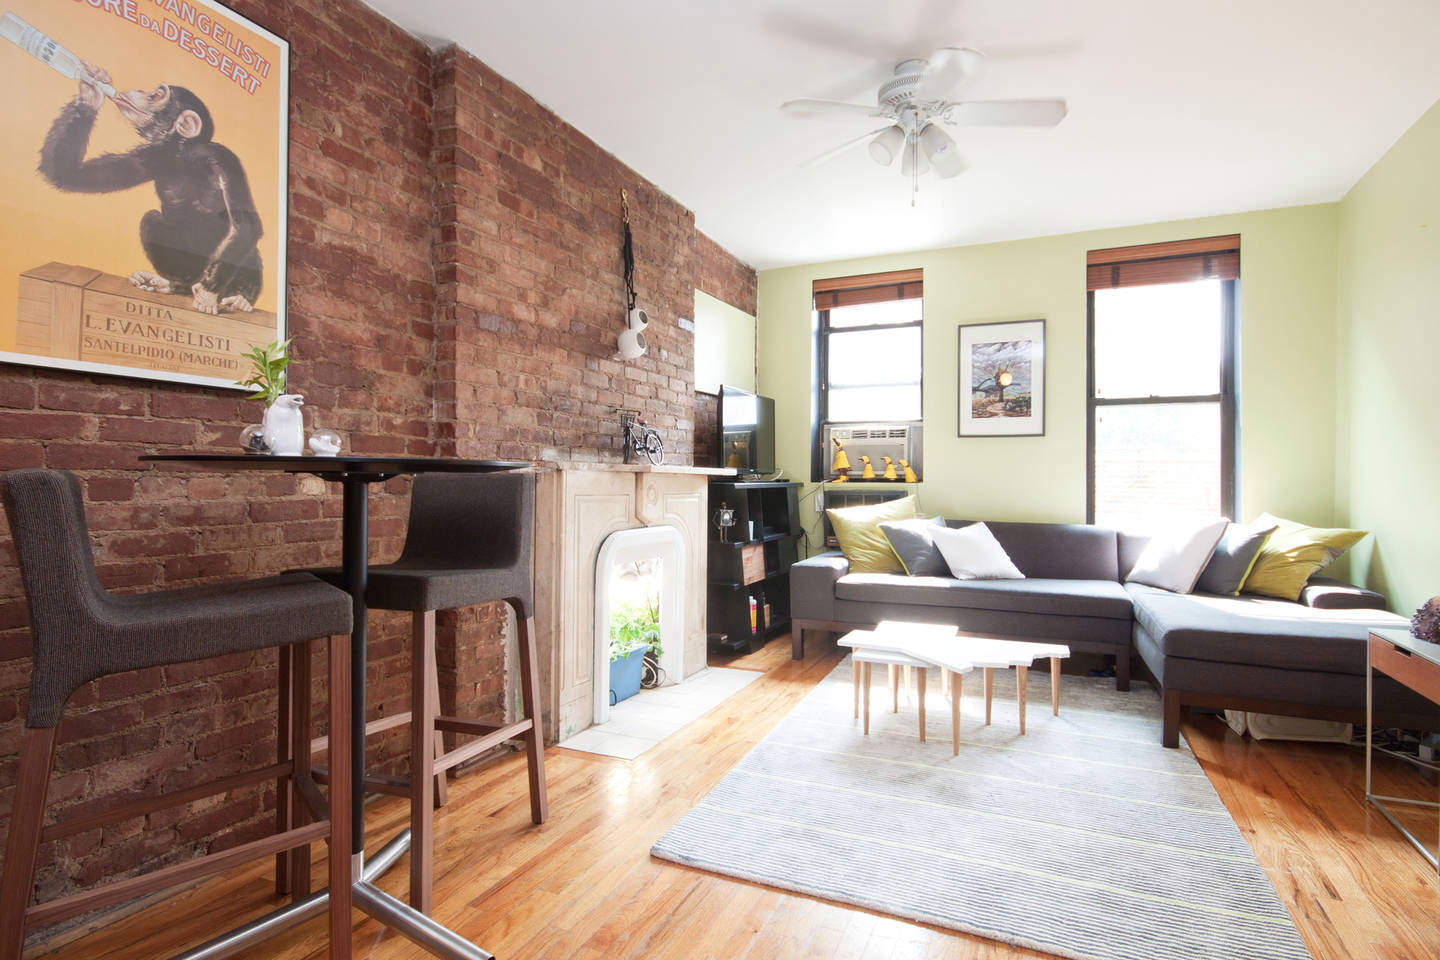 brickwork in apartment decor ideas